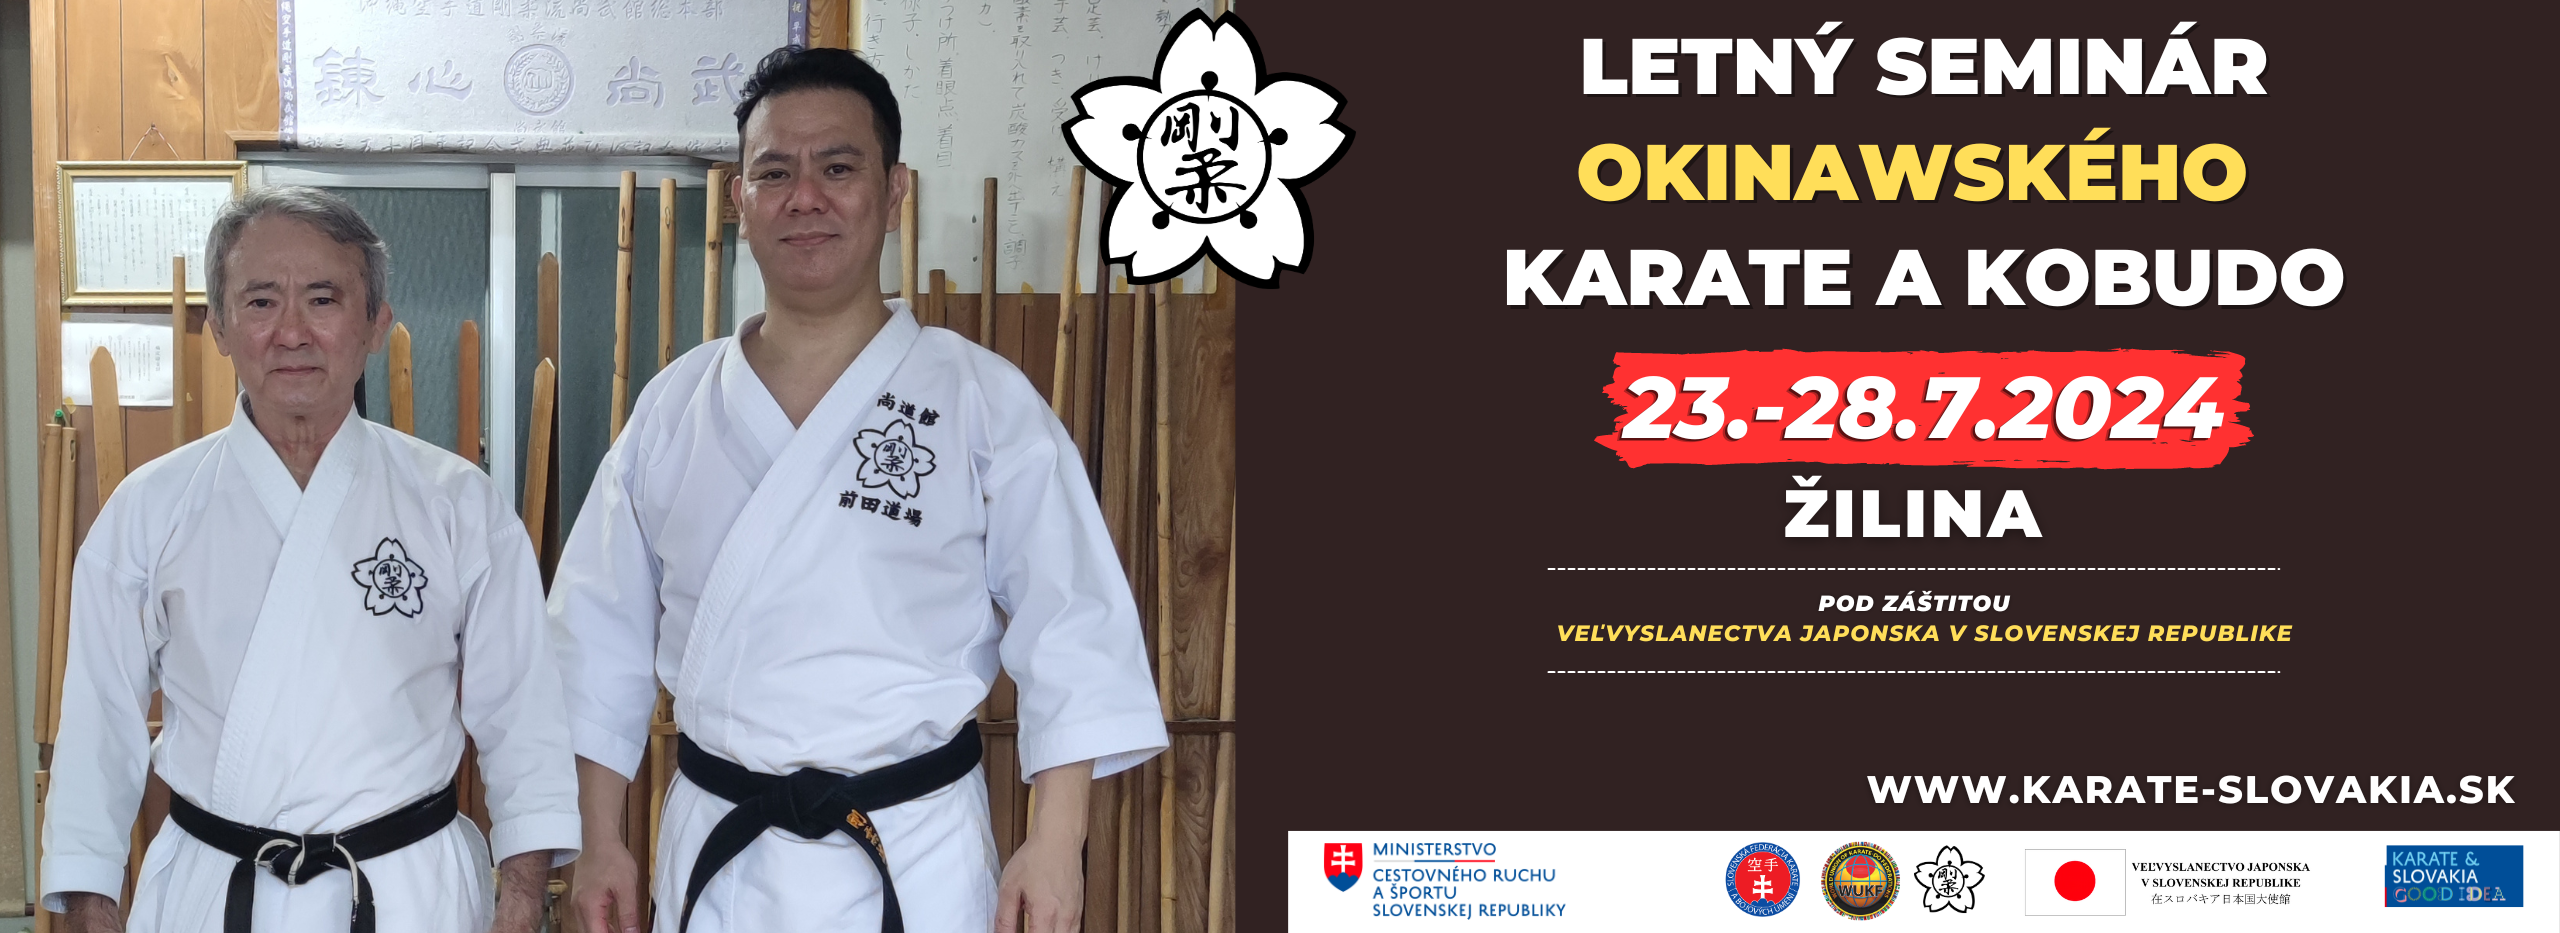 https://karate-slovakia.sk/wp-content/uploads/letny-seminar-okinawskeho-karate-a-kobudo-2560-x-933-px.png